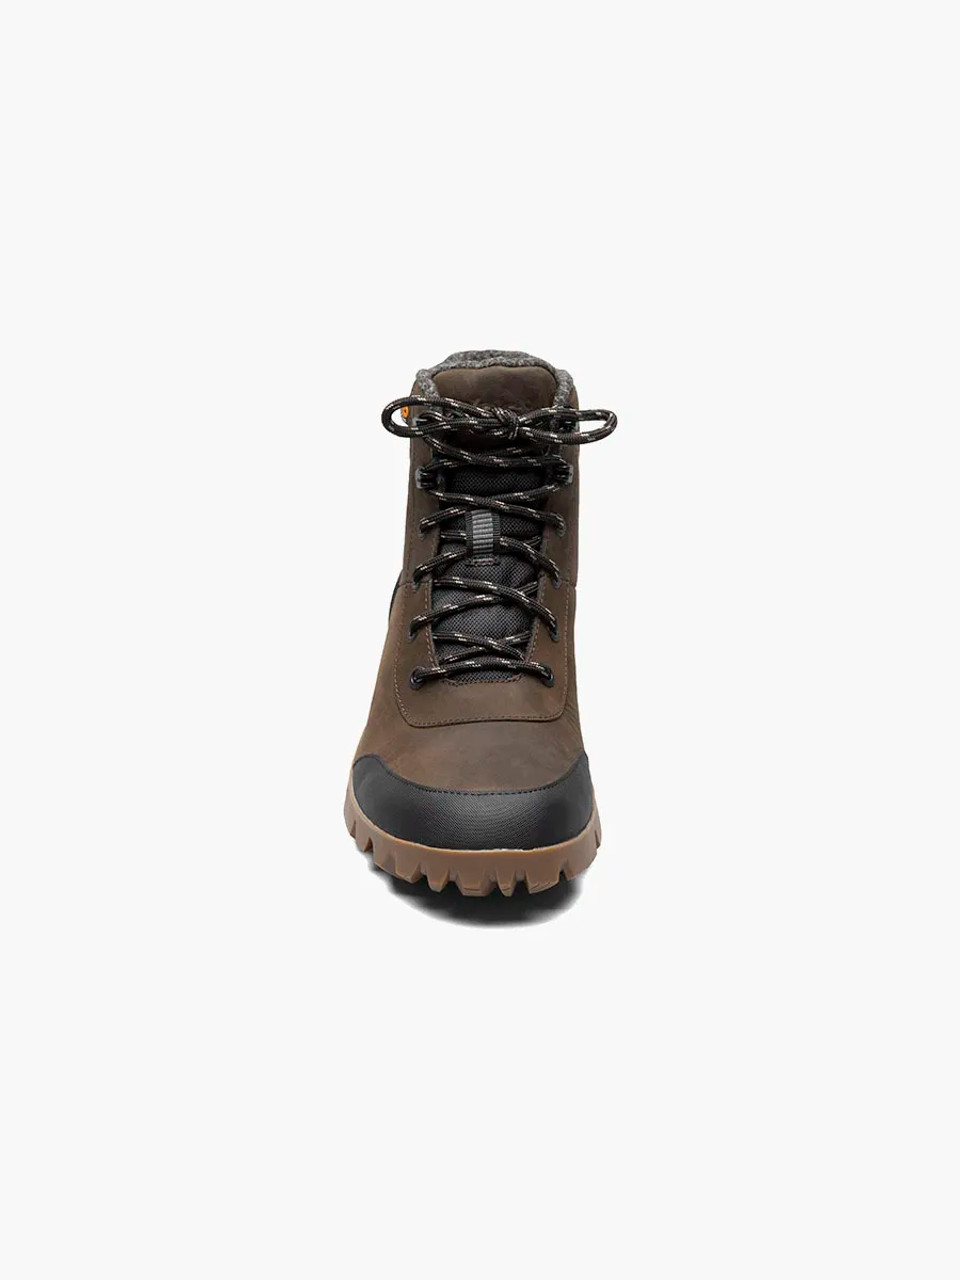 Bogs Arcata Urban Leather Mid Men's Winter Boots